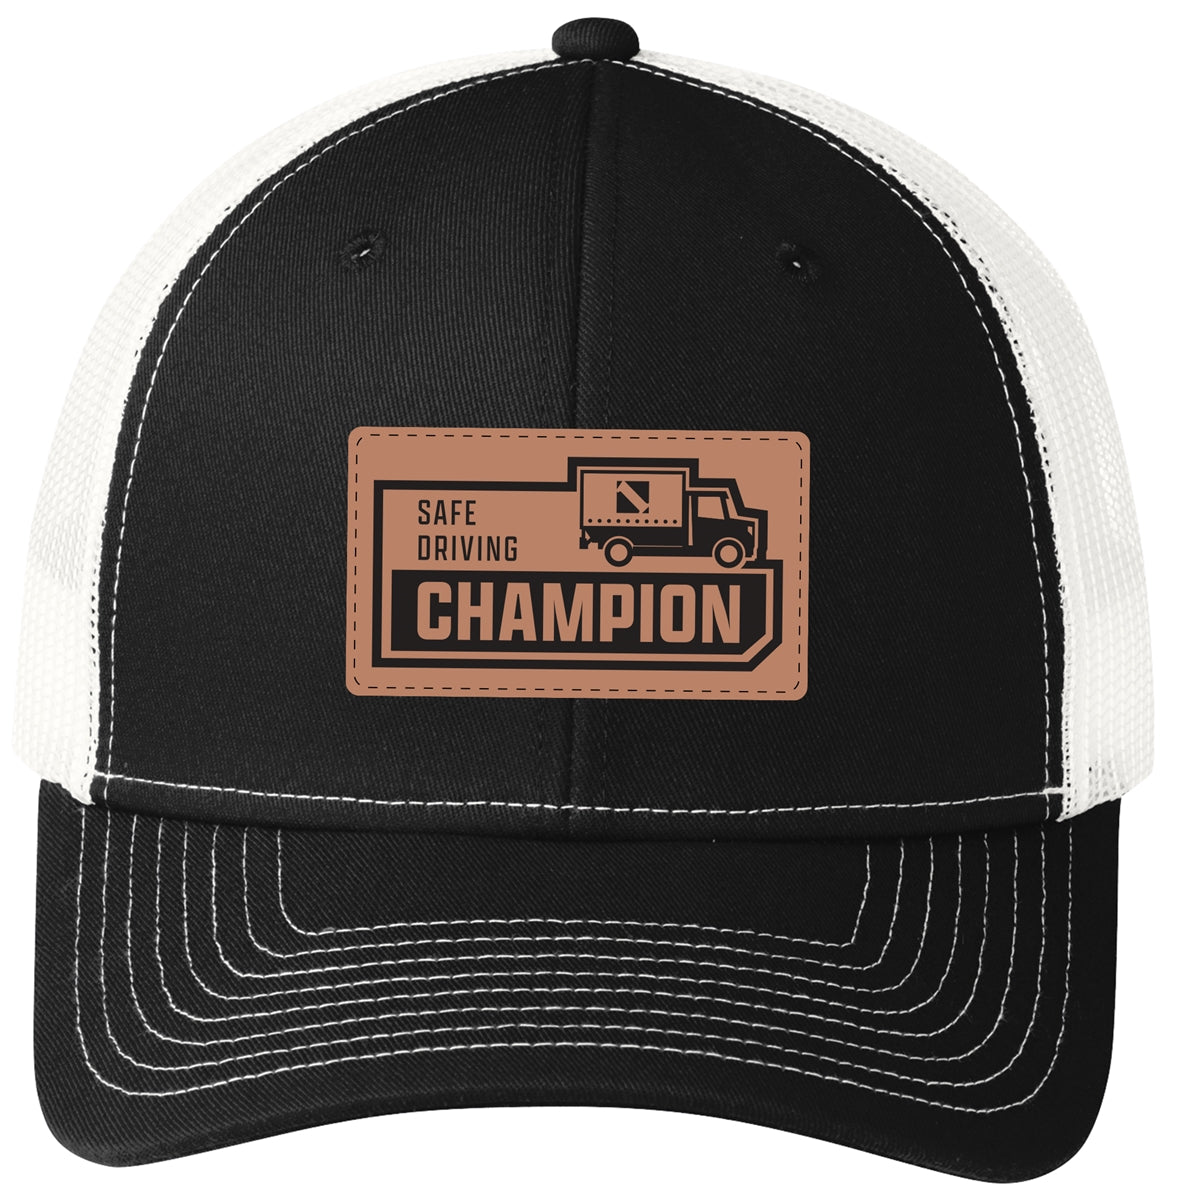 Safe Driving Champions Snapback Trucker Cap